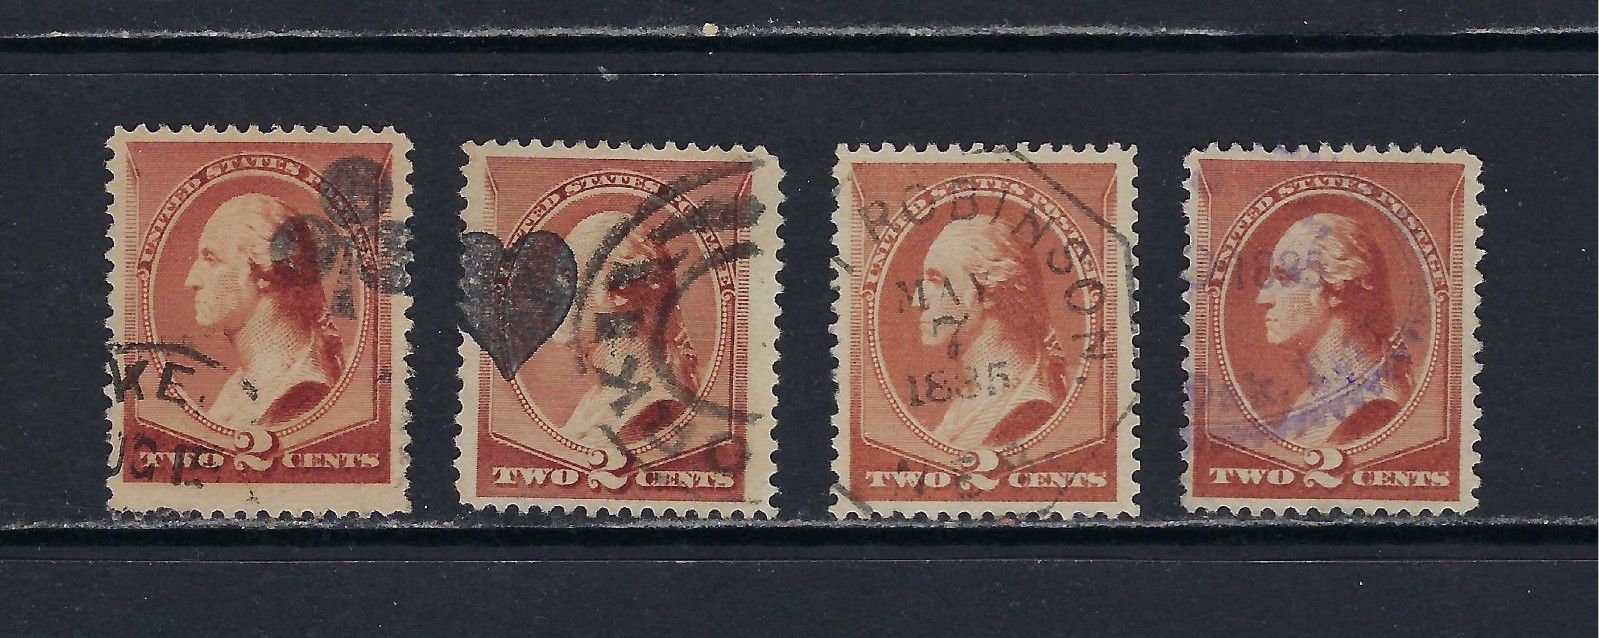 1883 U.S. Scott 210 (x4) 2c red brown Washington w/4 different desirable cancels